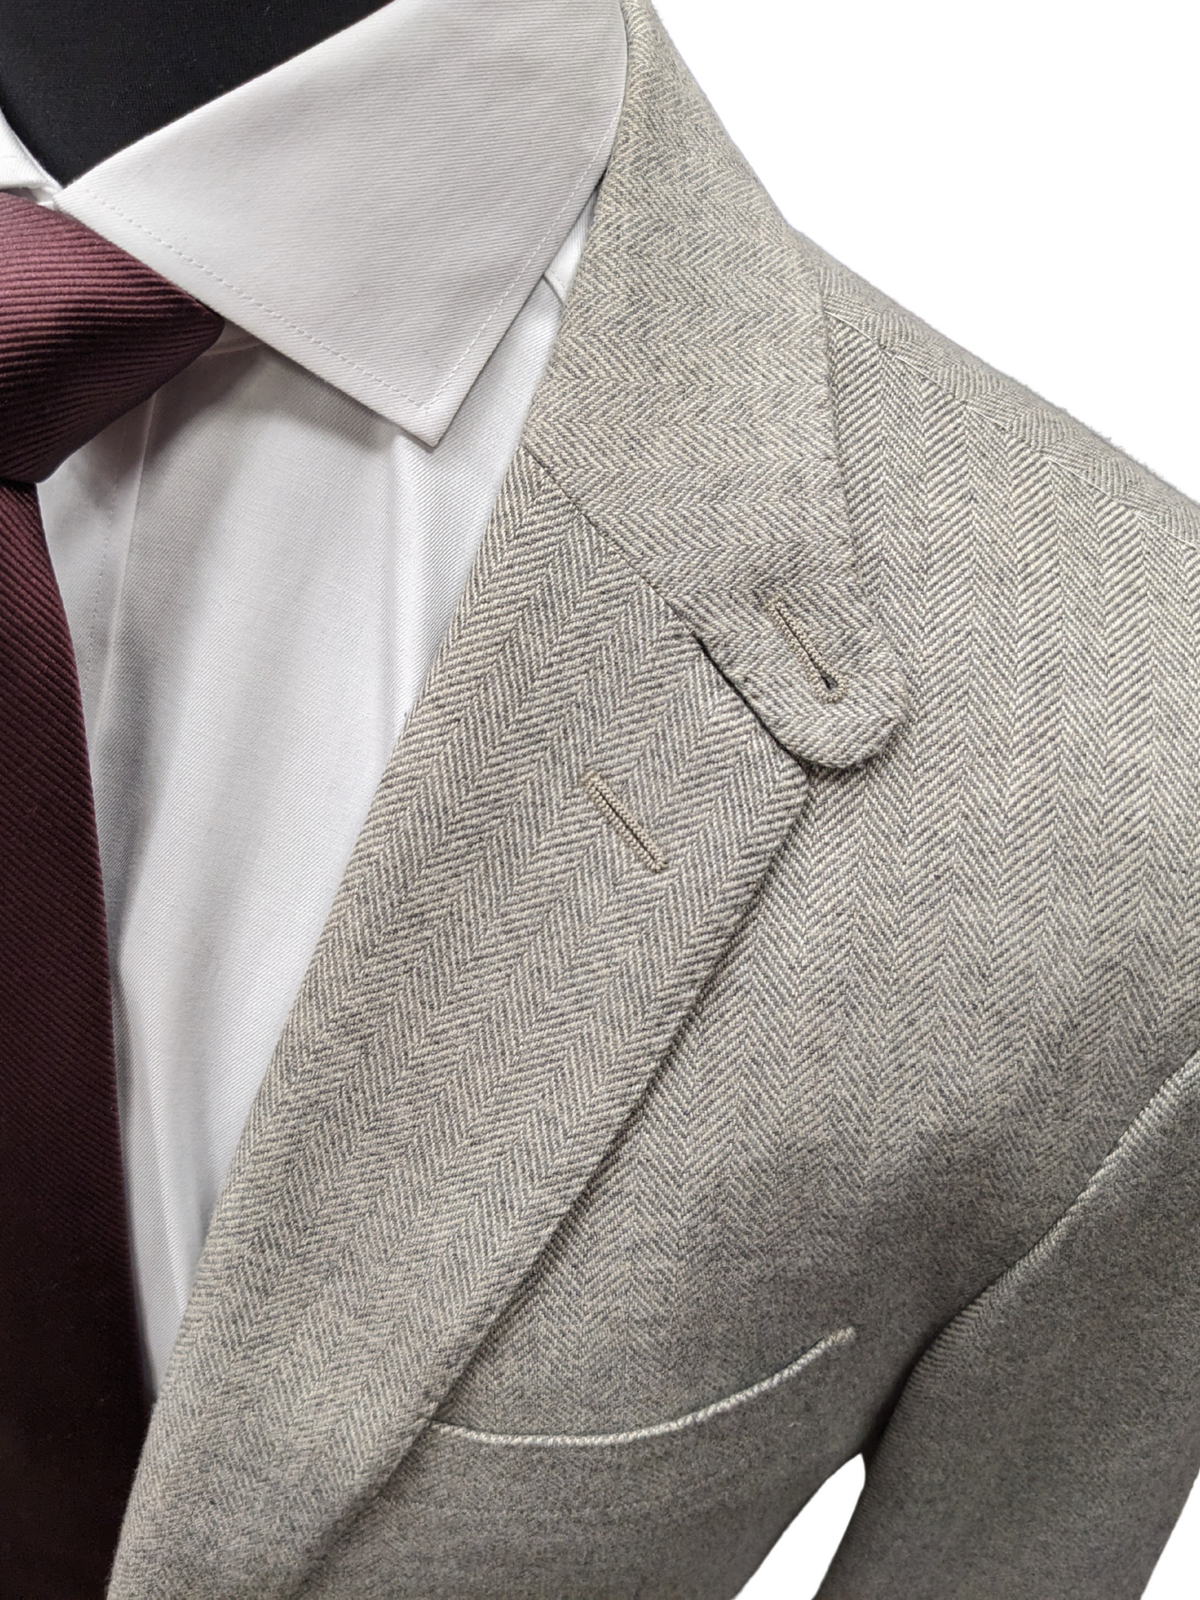 Ralph Lauren Purple Label Mens 38R Slim Fit Gray Herringbone 100% Wool 2 Piece Suit